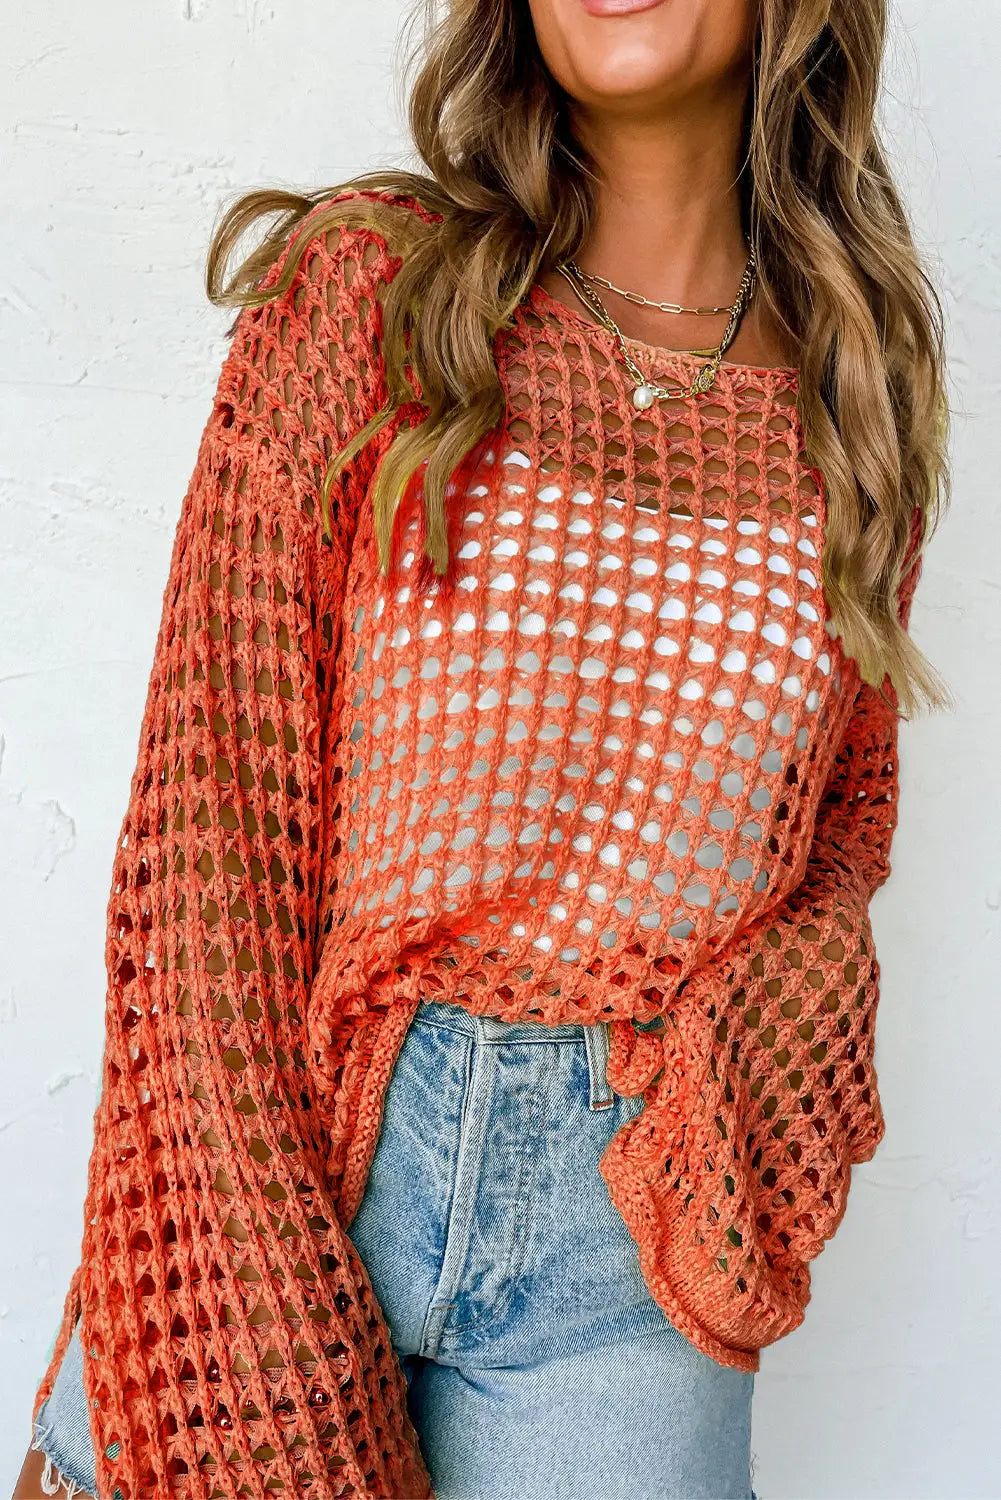 Crochet top - orange open knit bell sleeve tunic sweater - s / 65% acrylic + 35% polyamide - sweaters